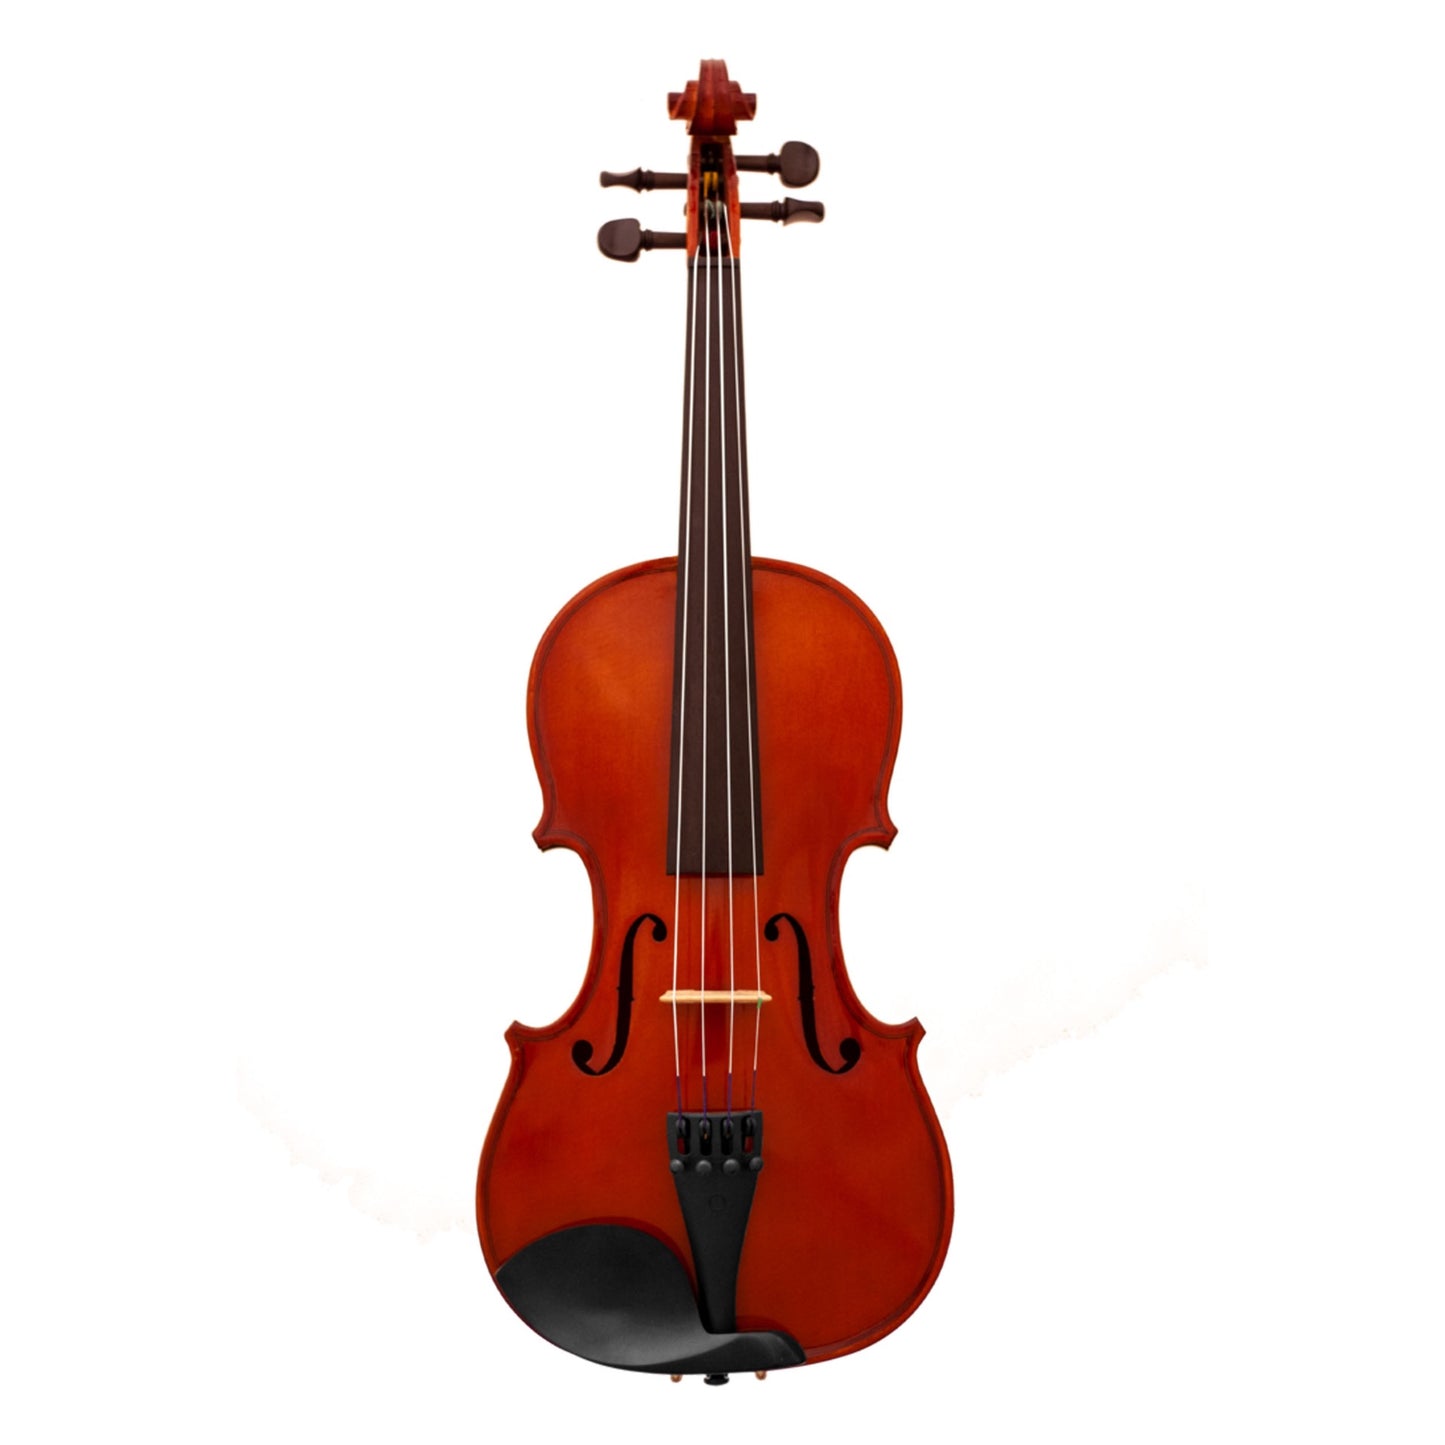 Maple Leaf Strings Model 110 13” Viola Outfit